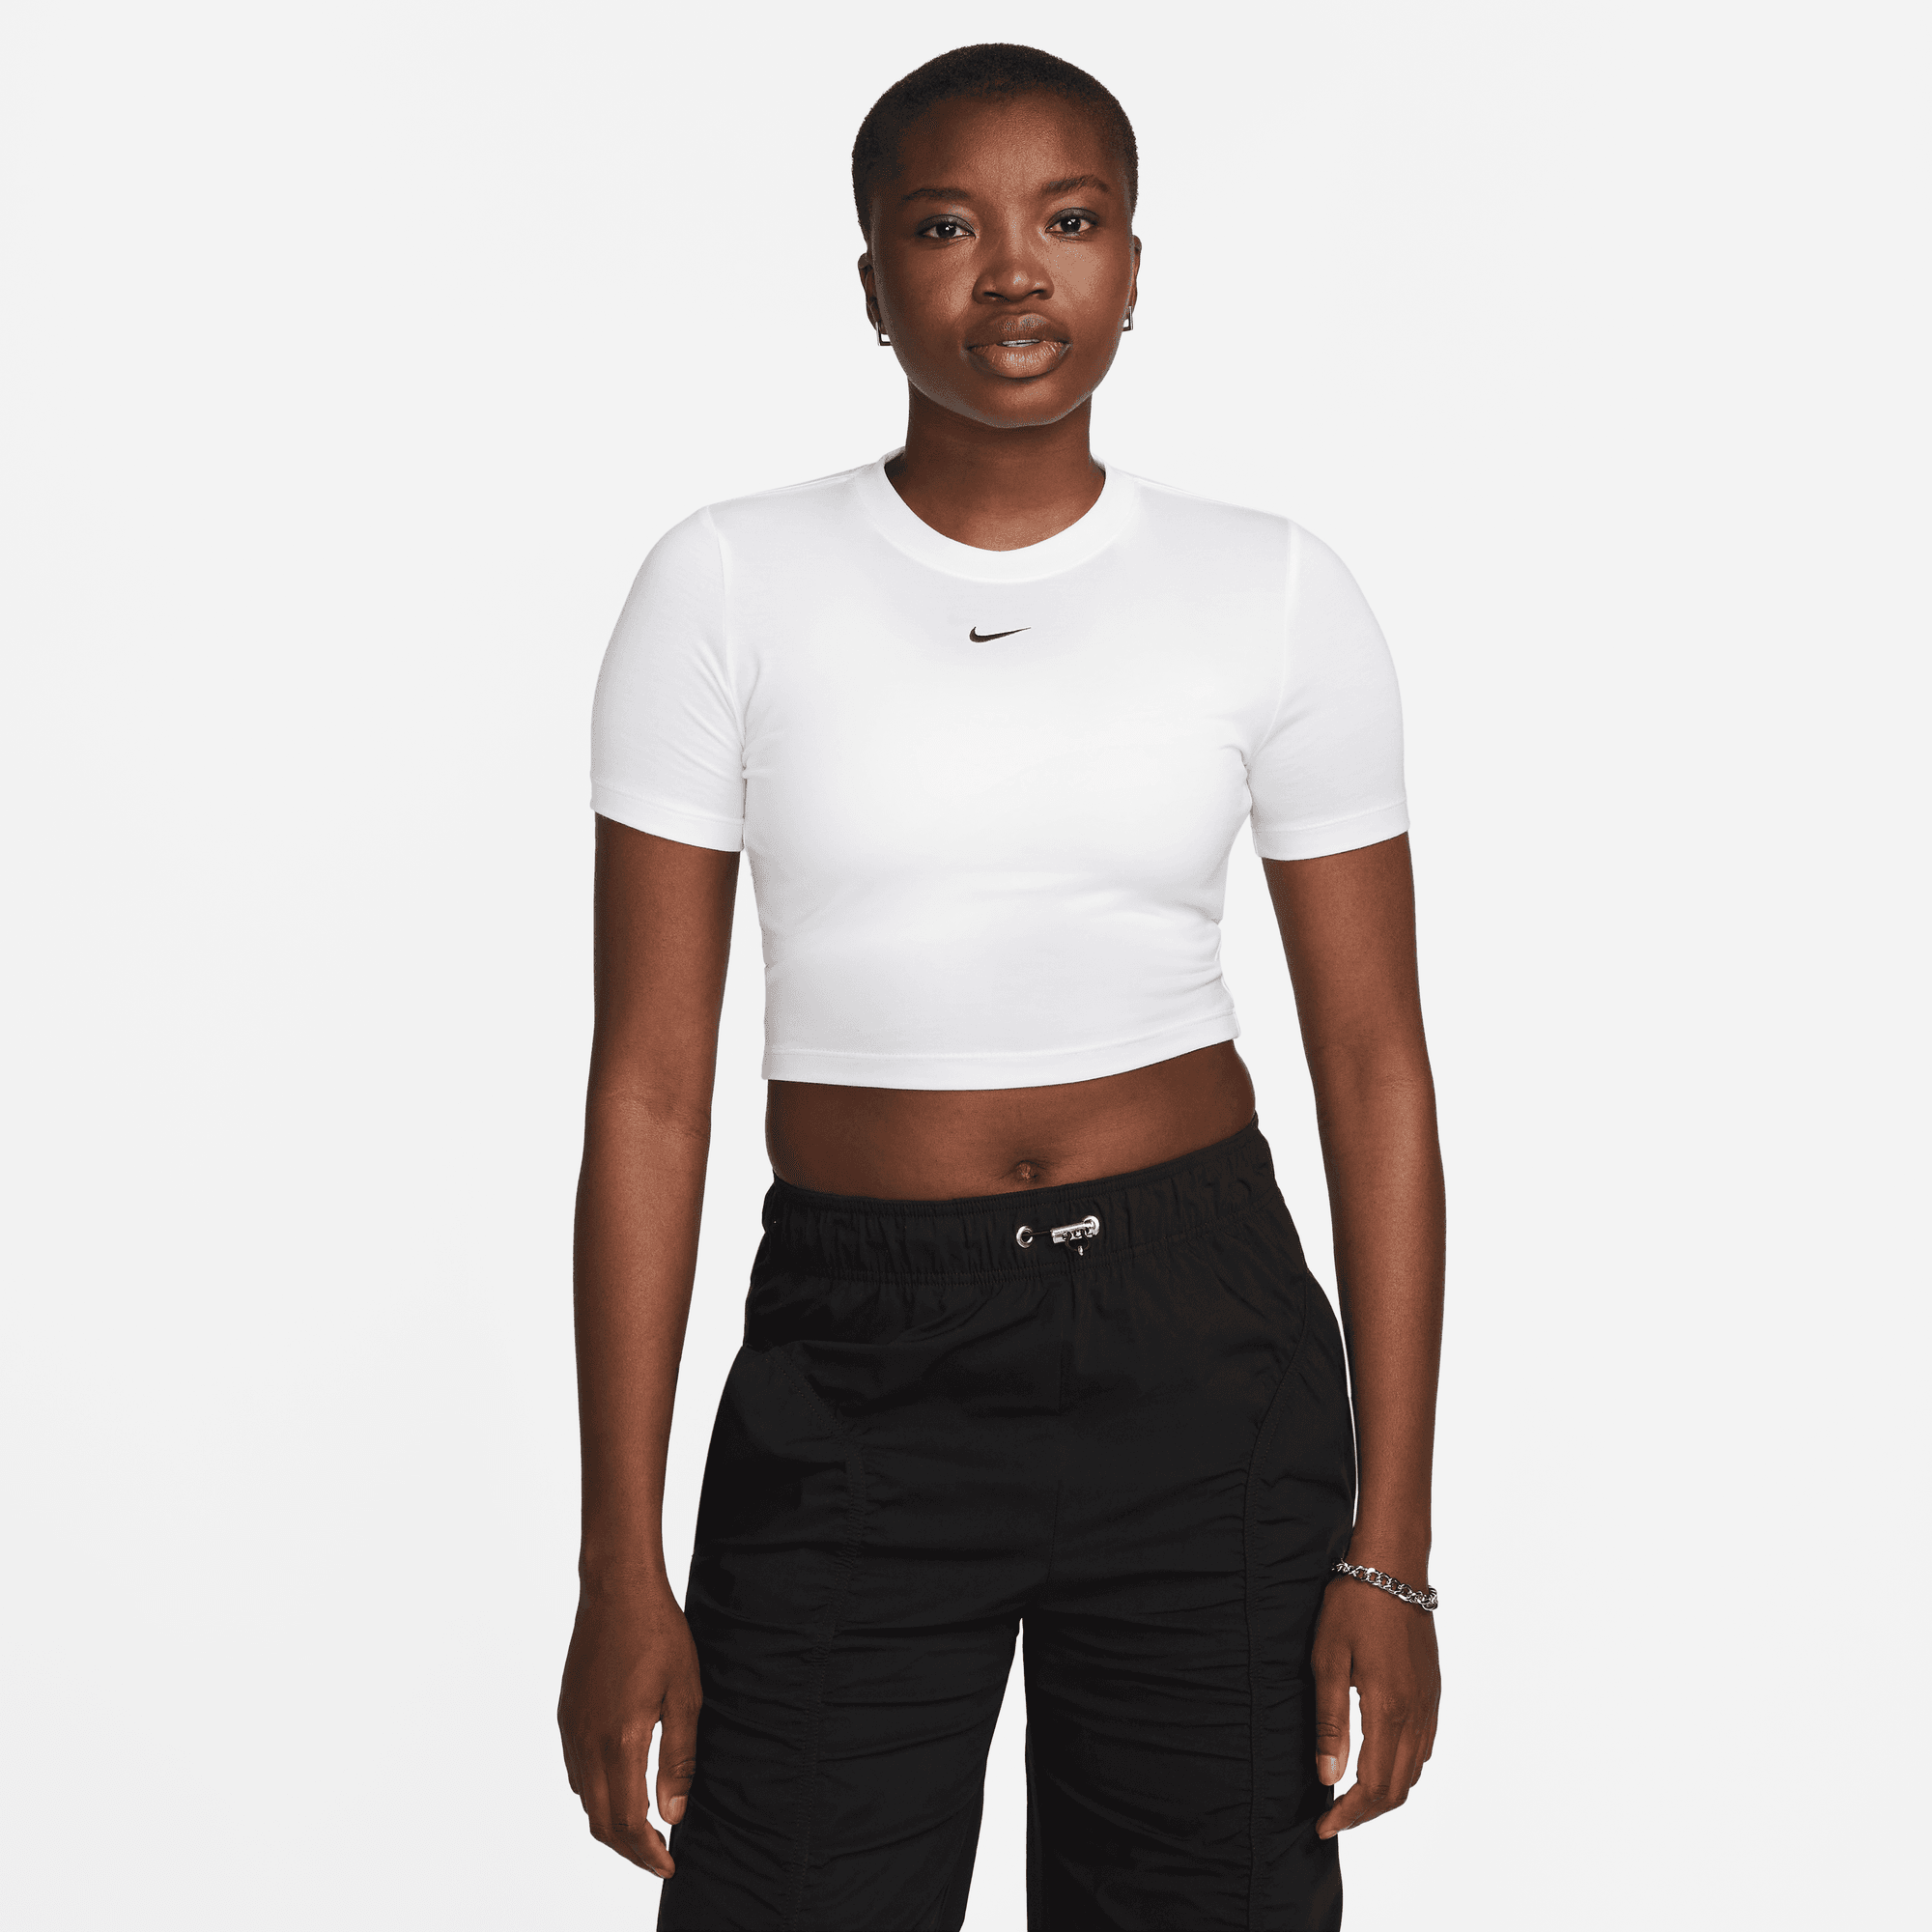 Nike Swoosh graphic slim crop t-shirt in black